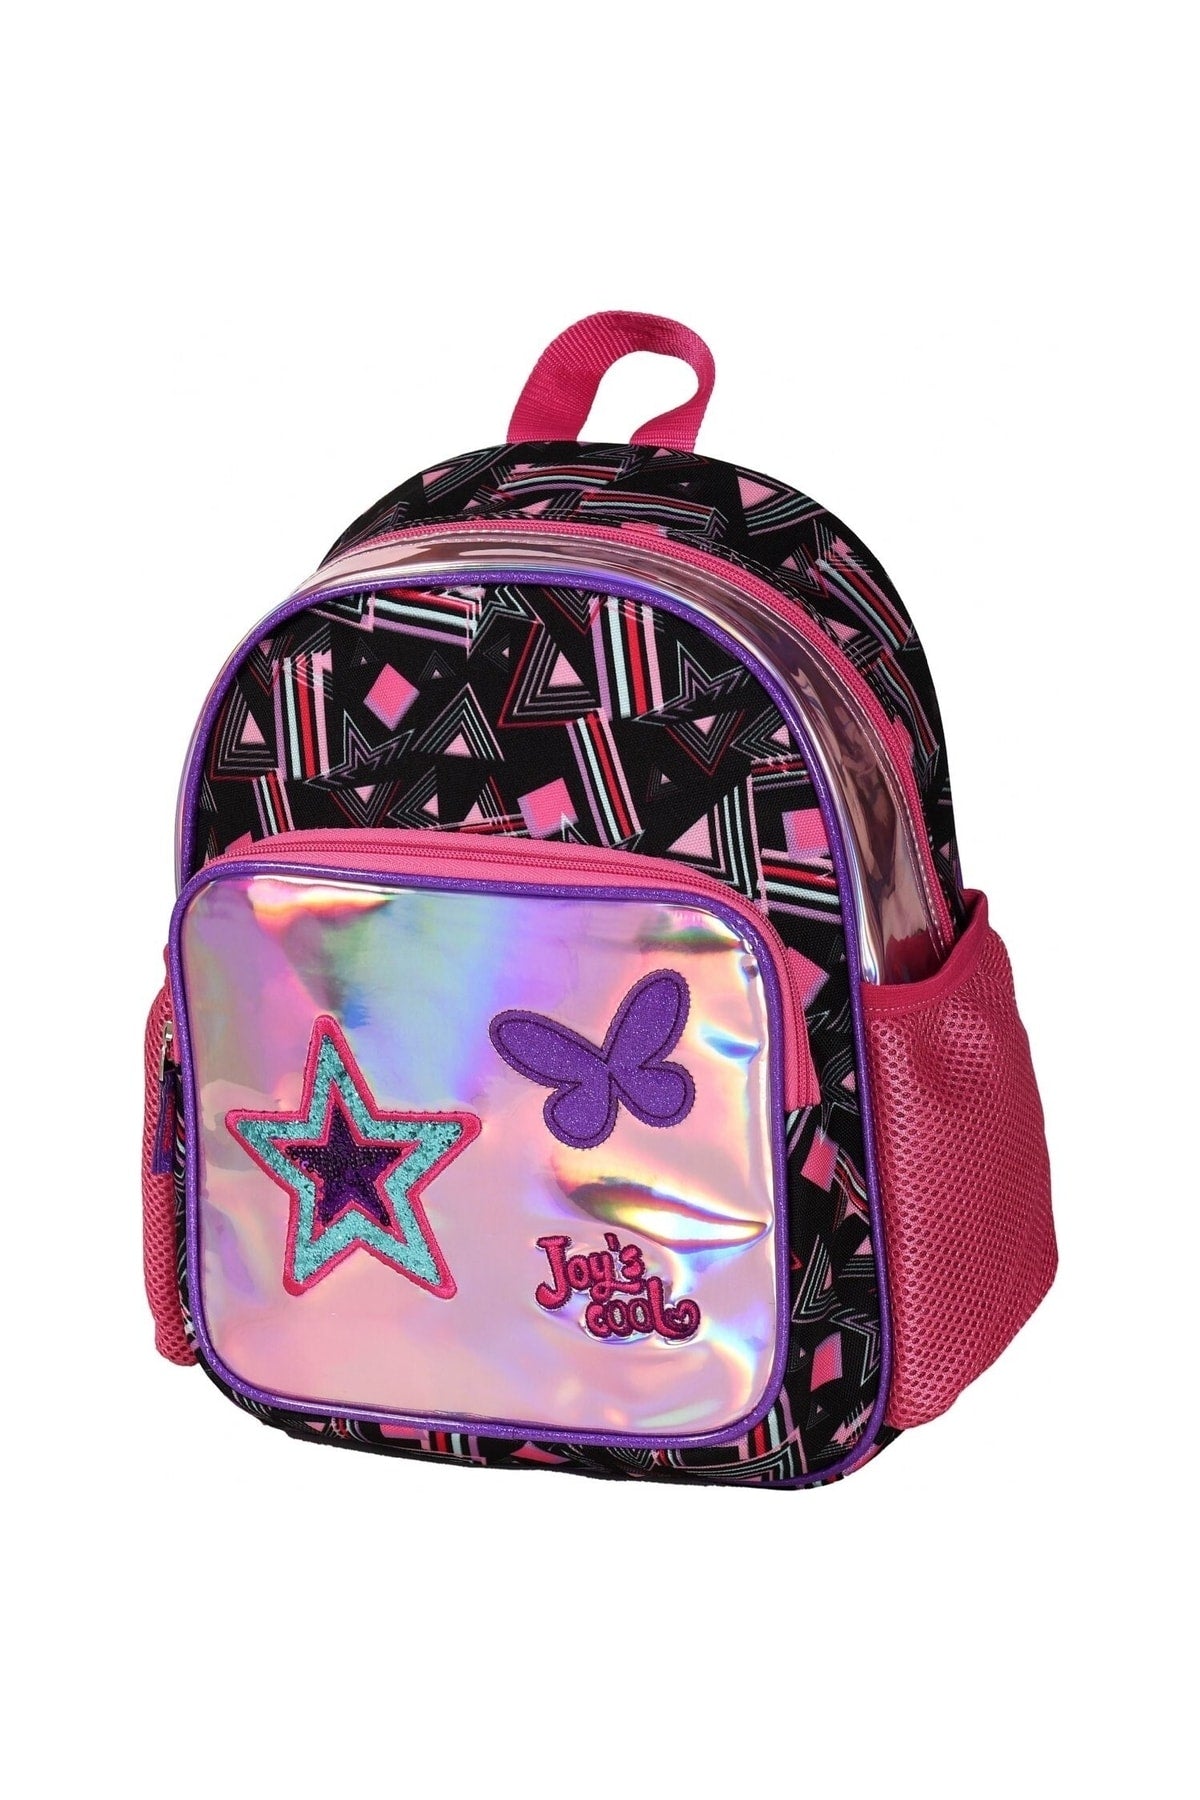 Joy's Cool Shiny Star Embroidered Pink Kindergarten Backpack